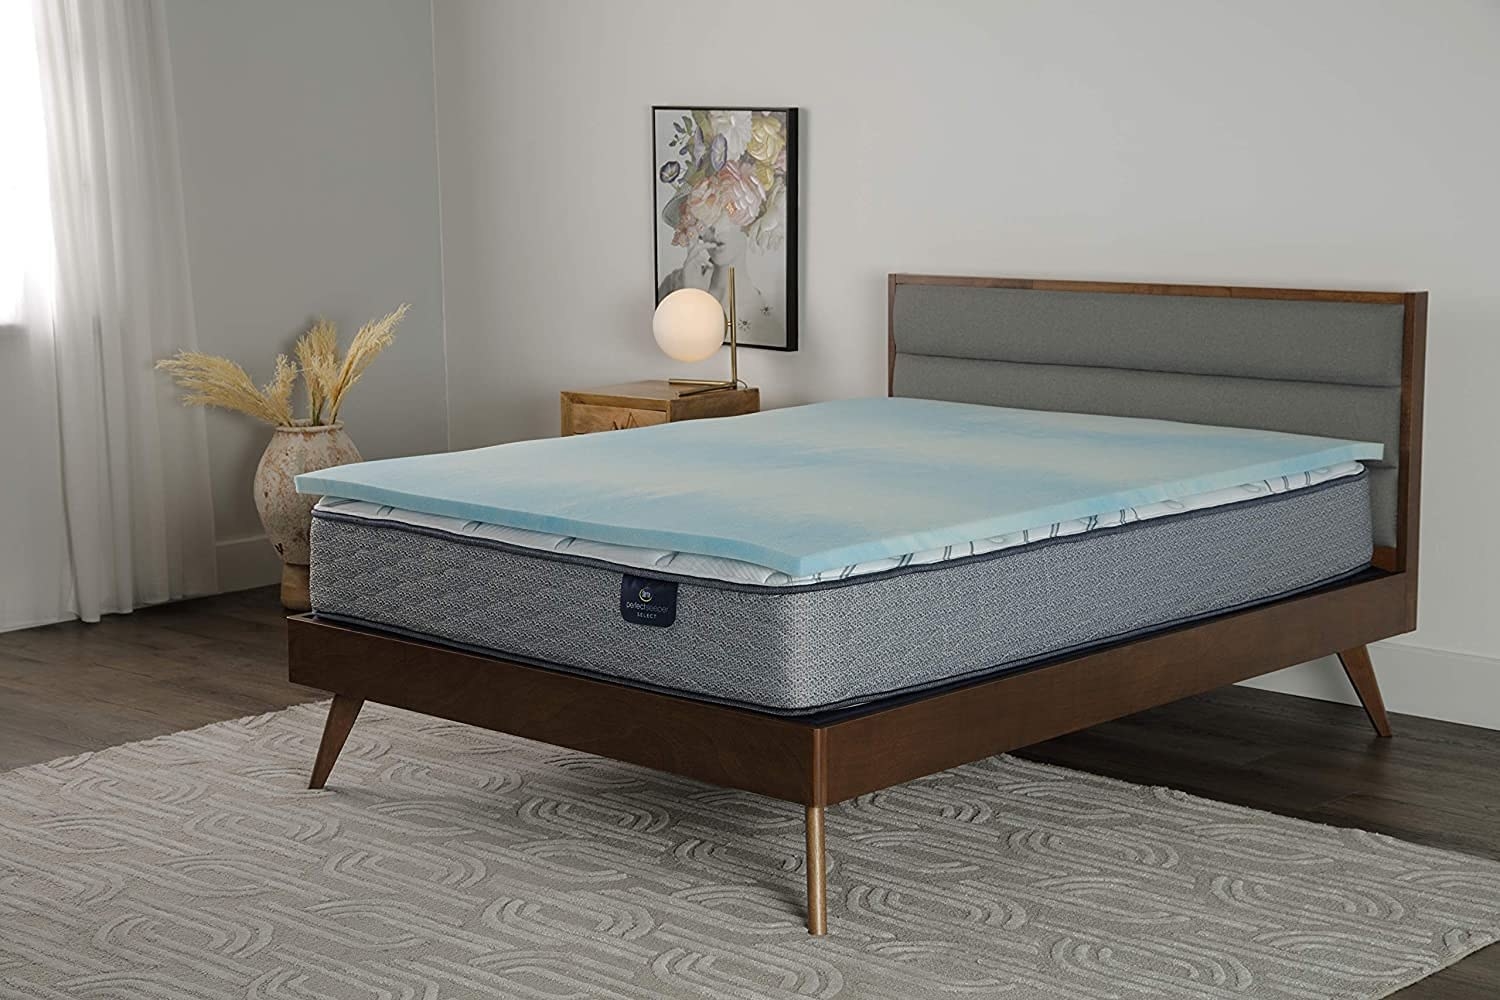 serta blue mattress topper on mattress on wood bed